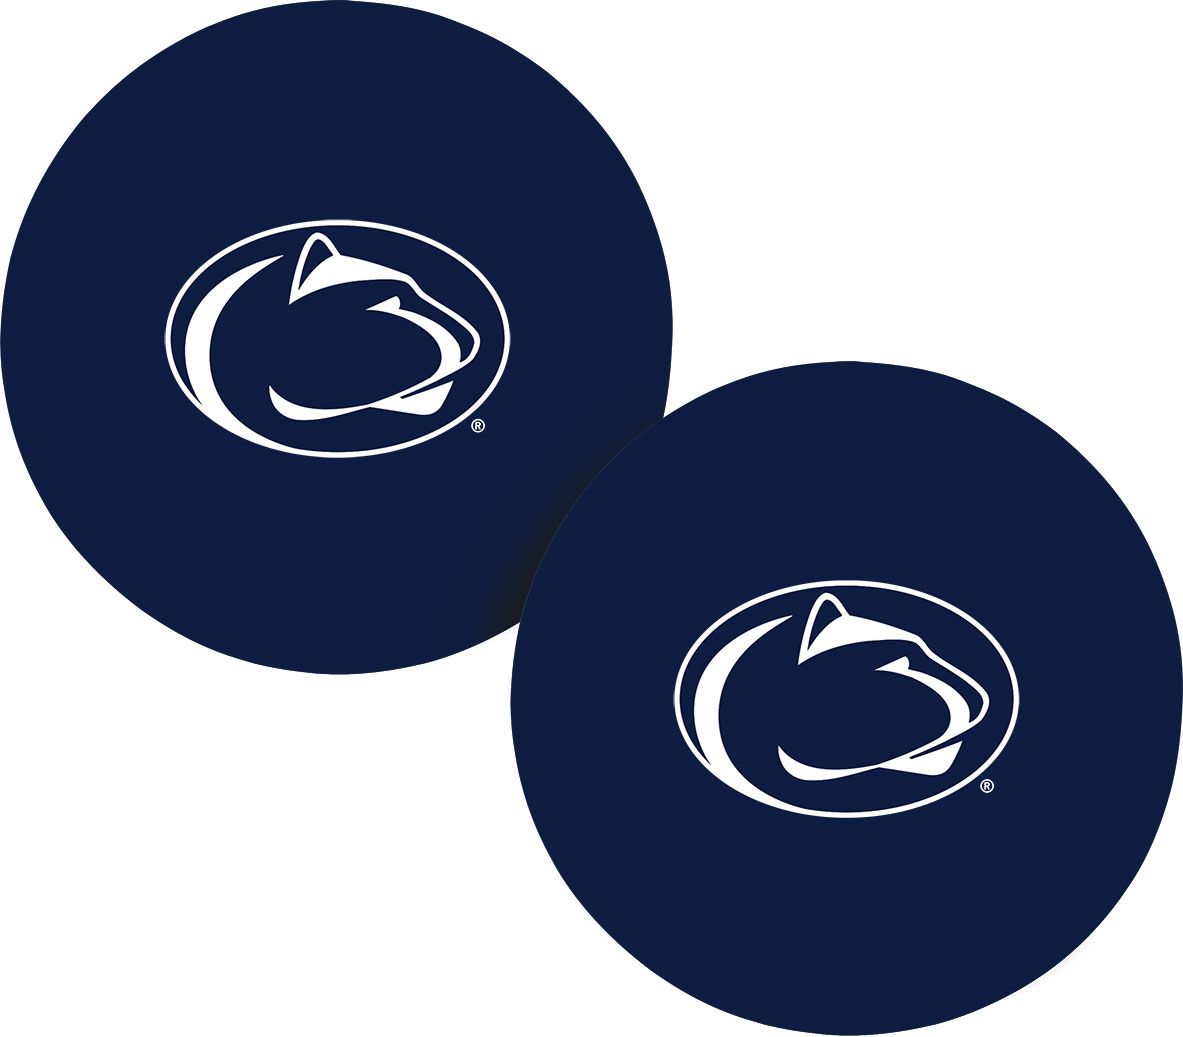 Penn State Nittany Lions Tritan Filter Water Bottle – walk-of-famesports